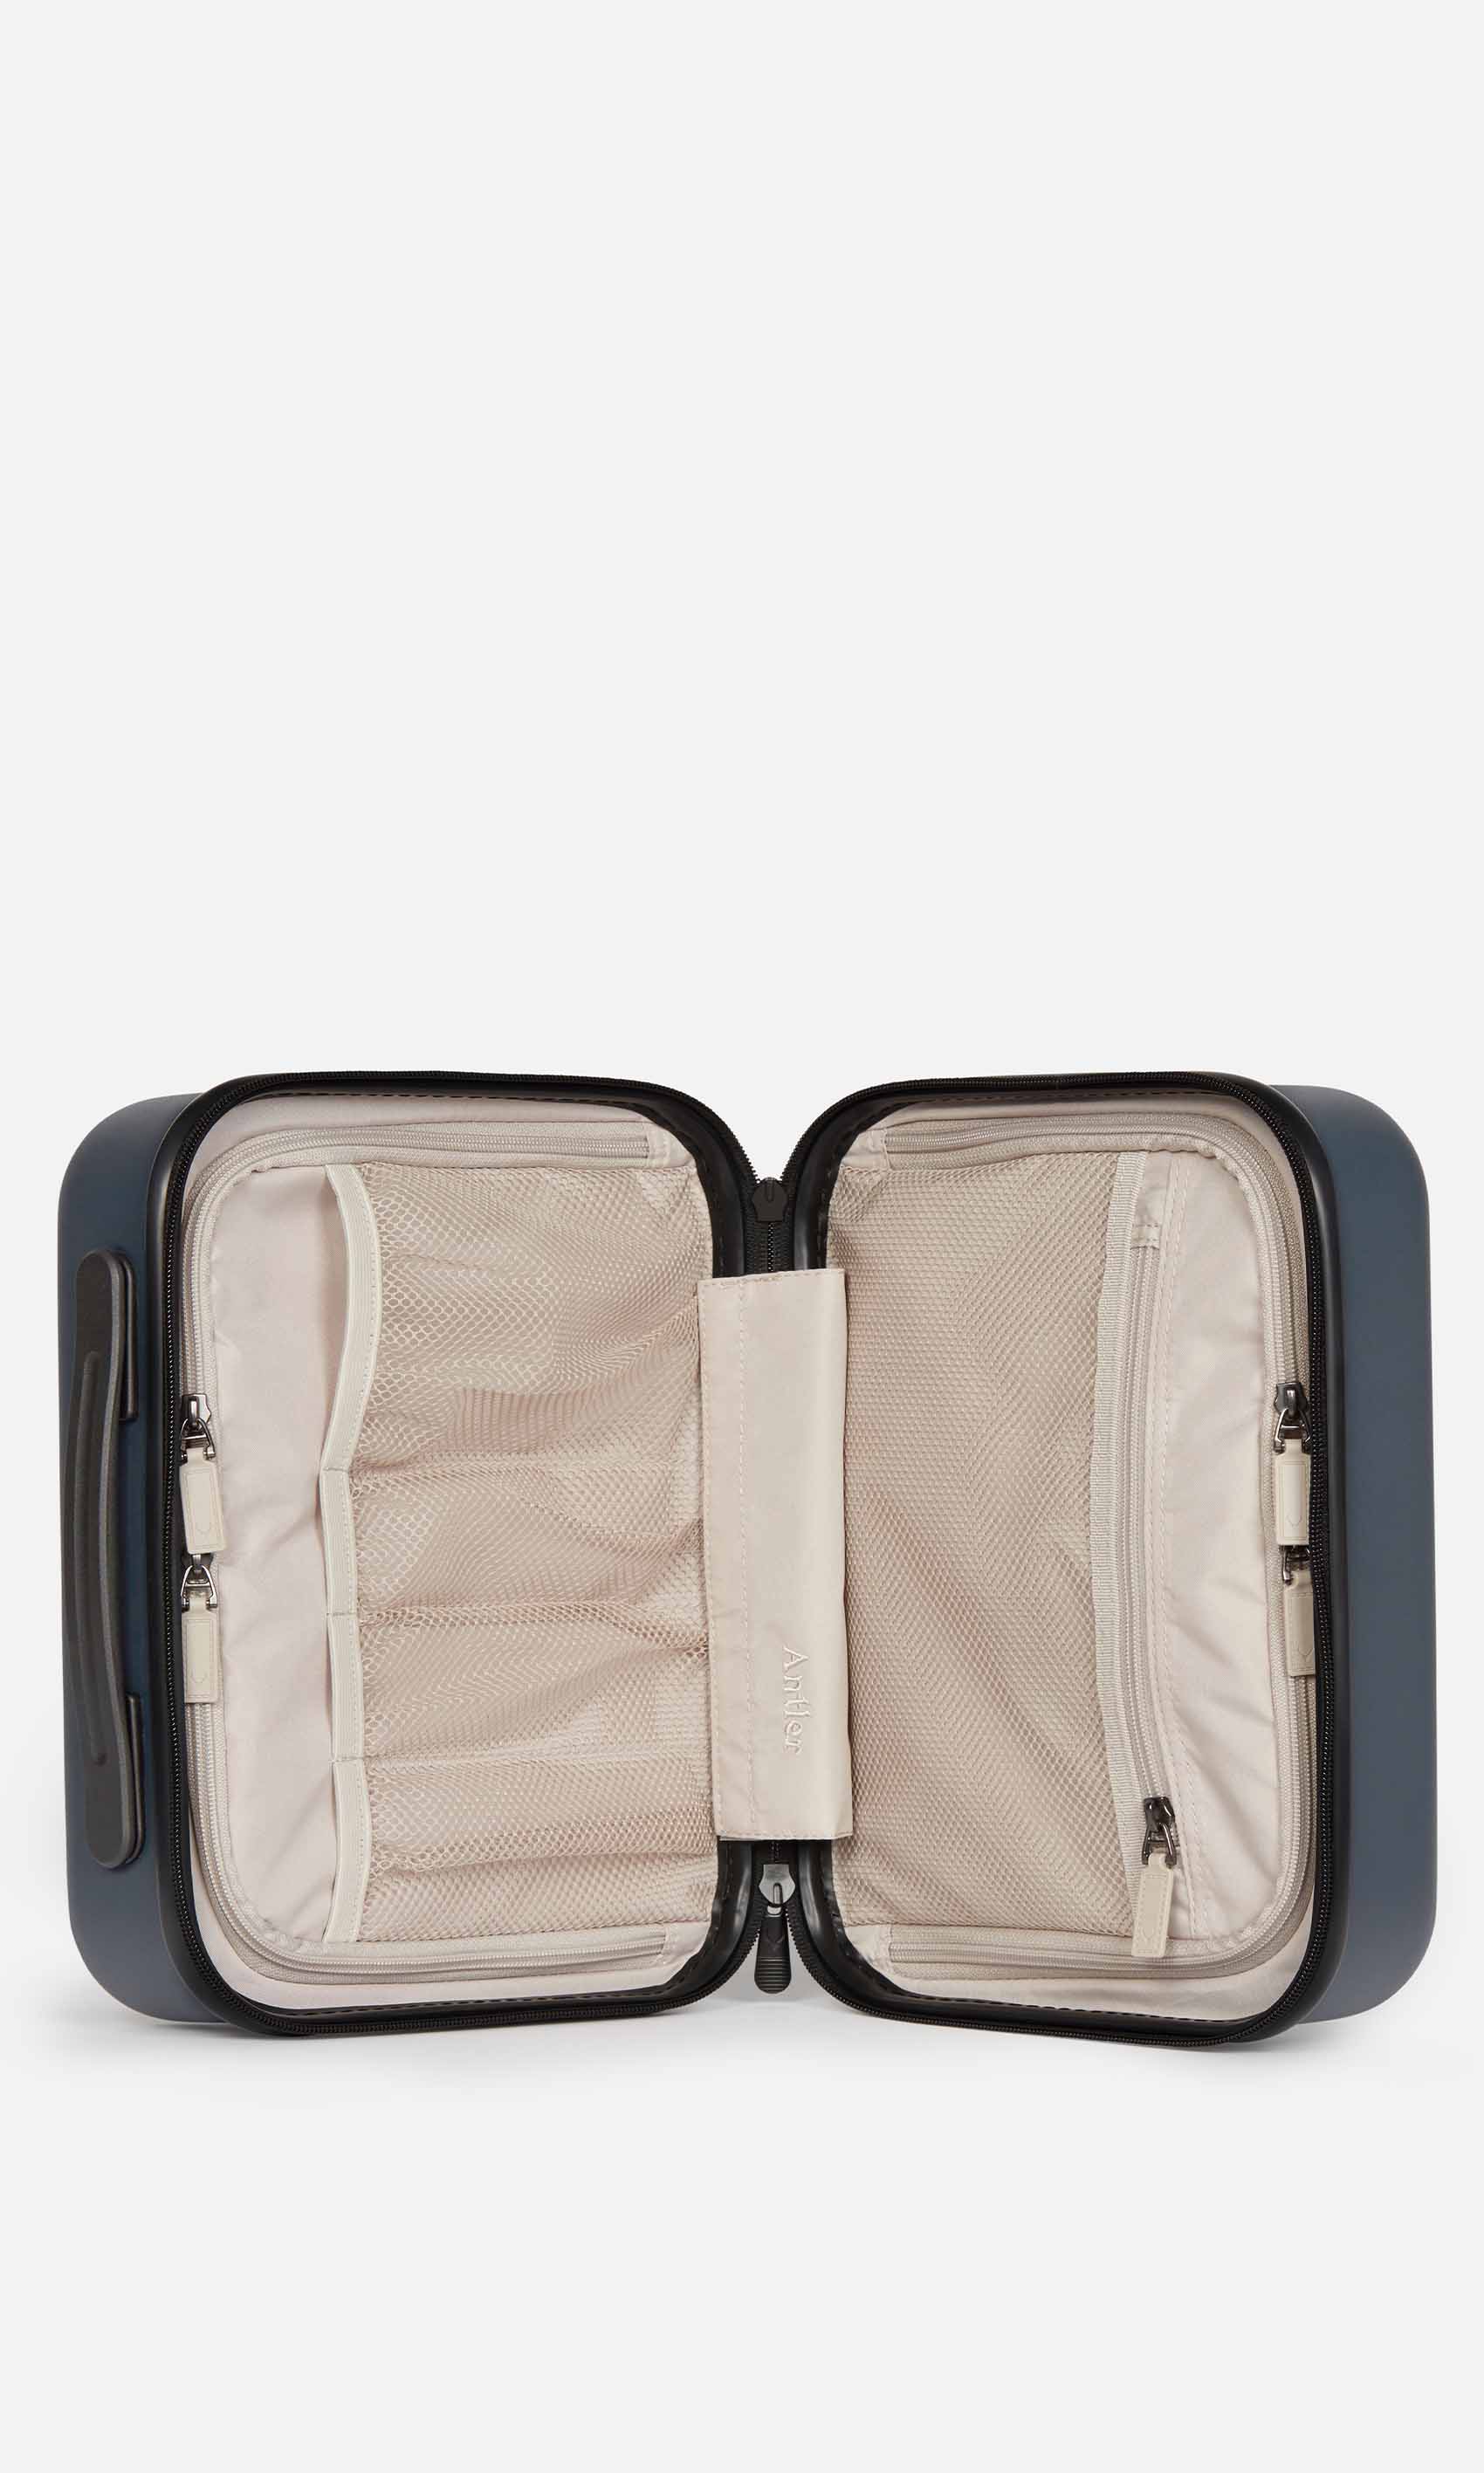 Antler Luggage -  Clifton vanity case in navy - Hard Suitcases Clifton Vanity Case Navy | Travel Accessories & Gifts | Antler 